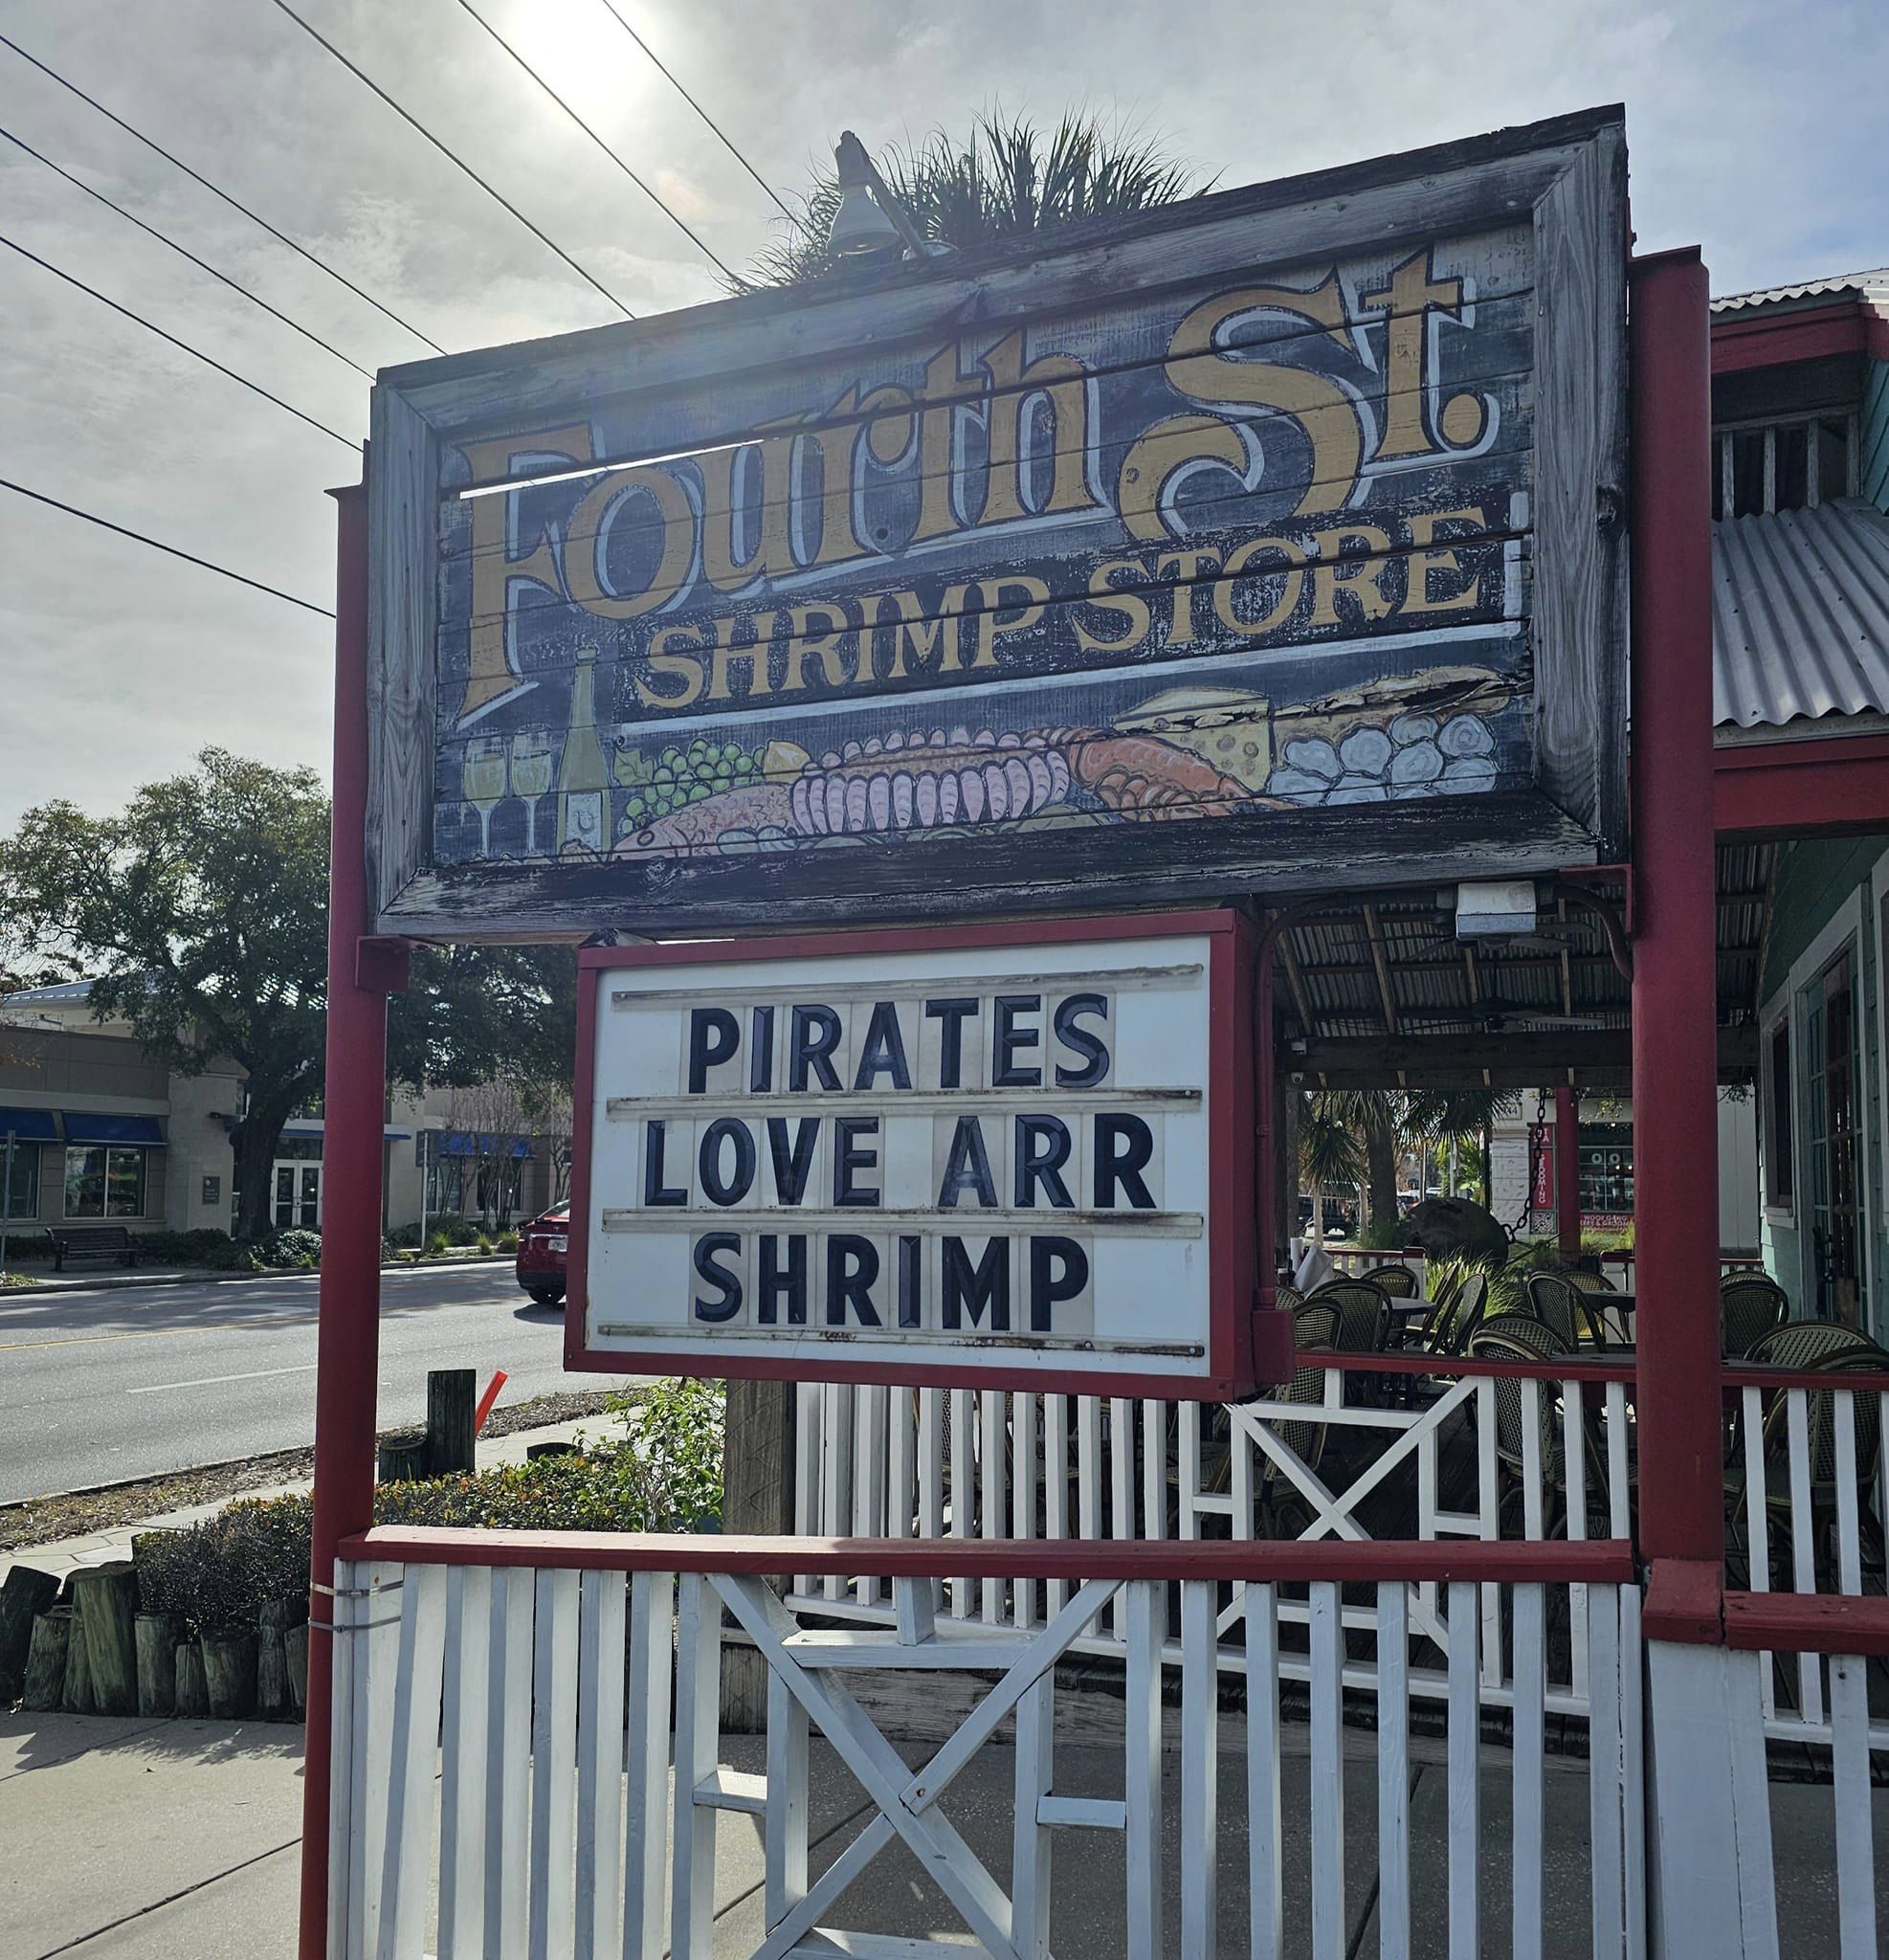 Fourth Street Shrimp Store